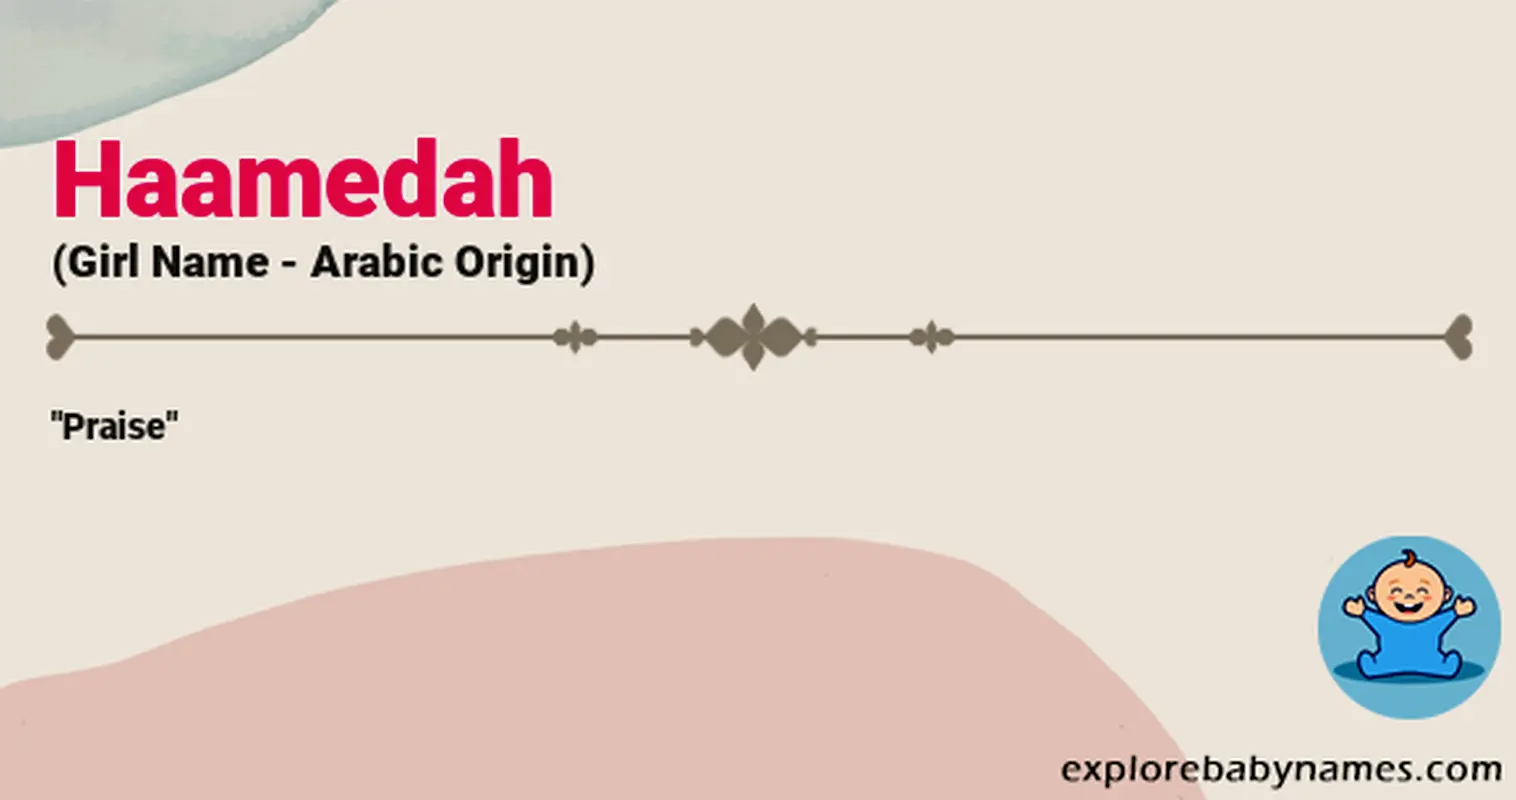 Meaning of Haamedah